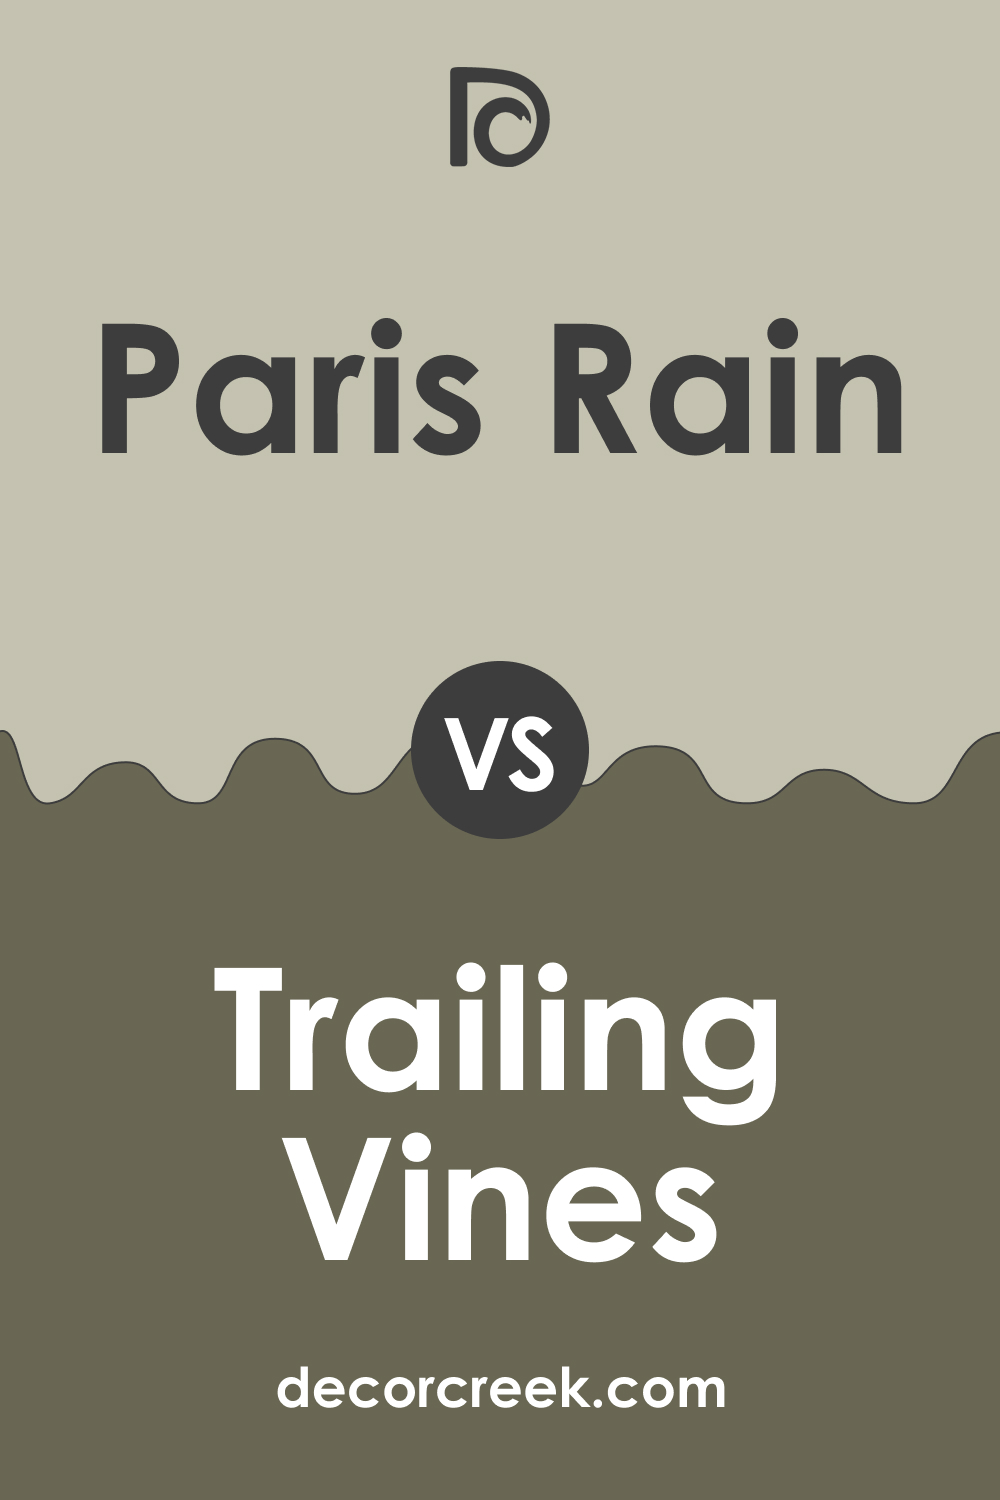 Paris Rain 1501 vs. BM 1505 Trailing Vines